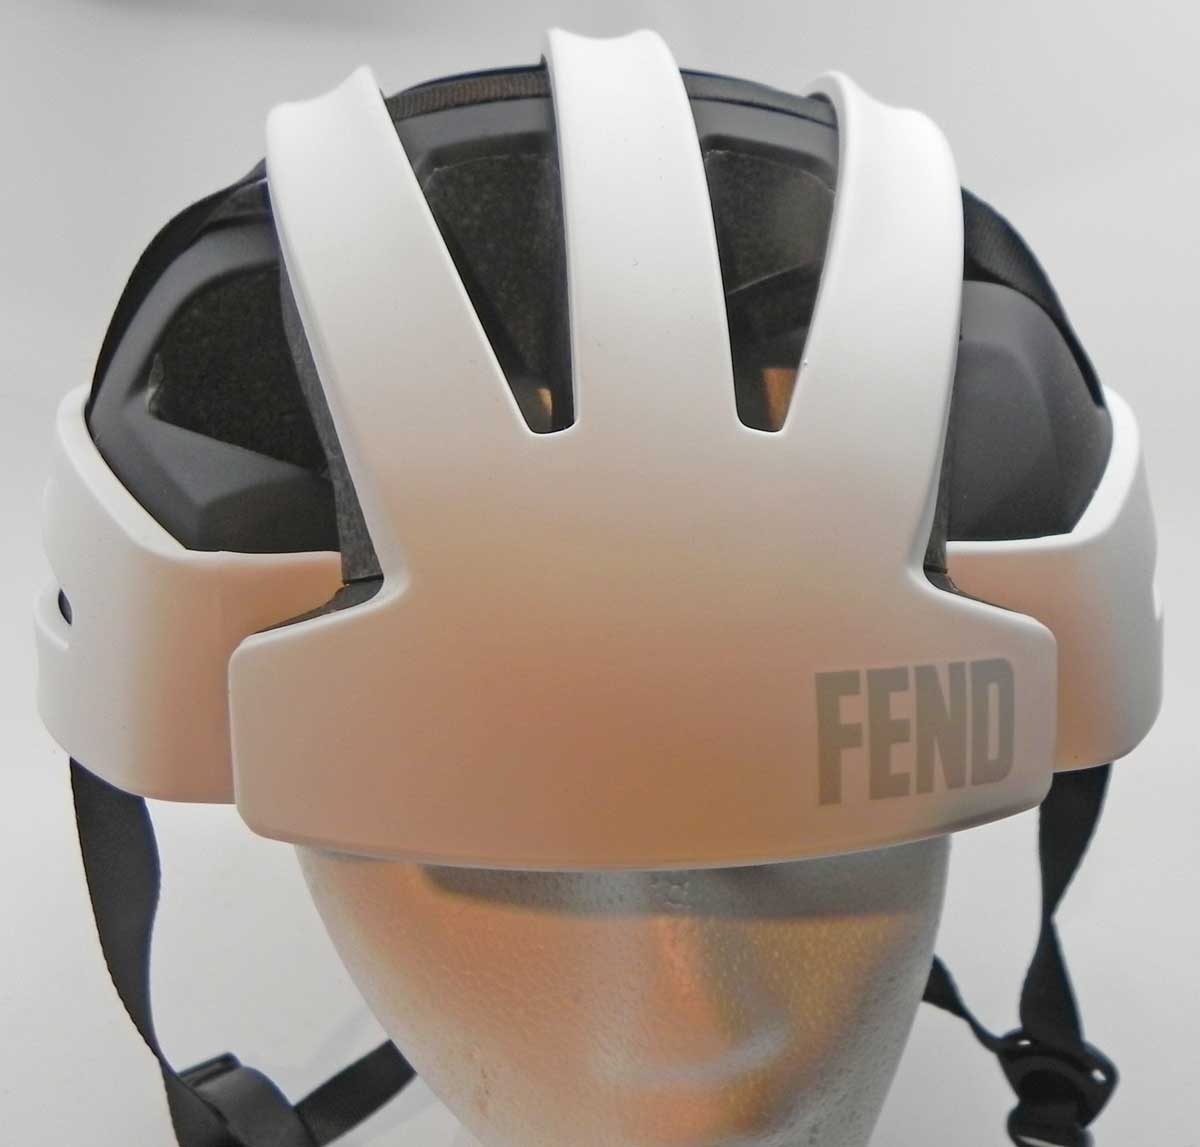 Fend helmet image 1